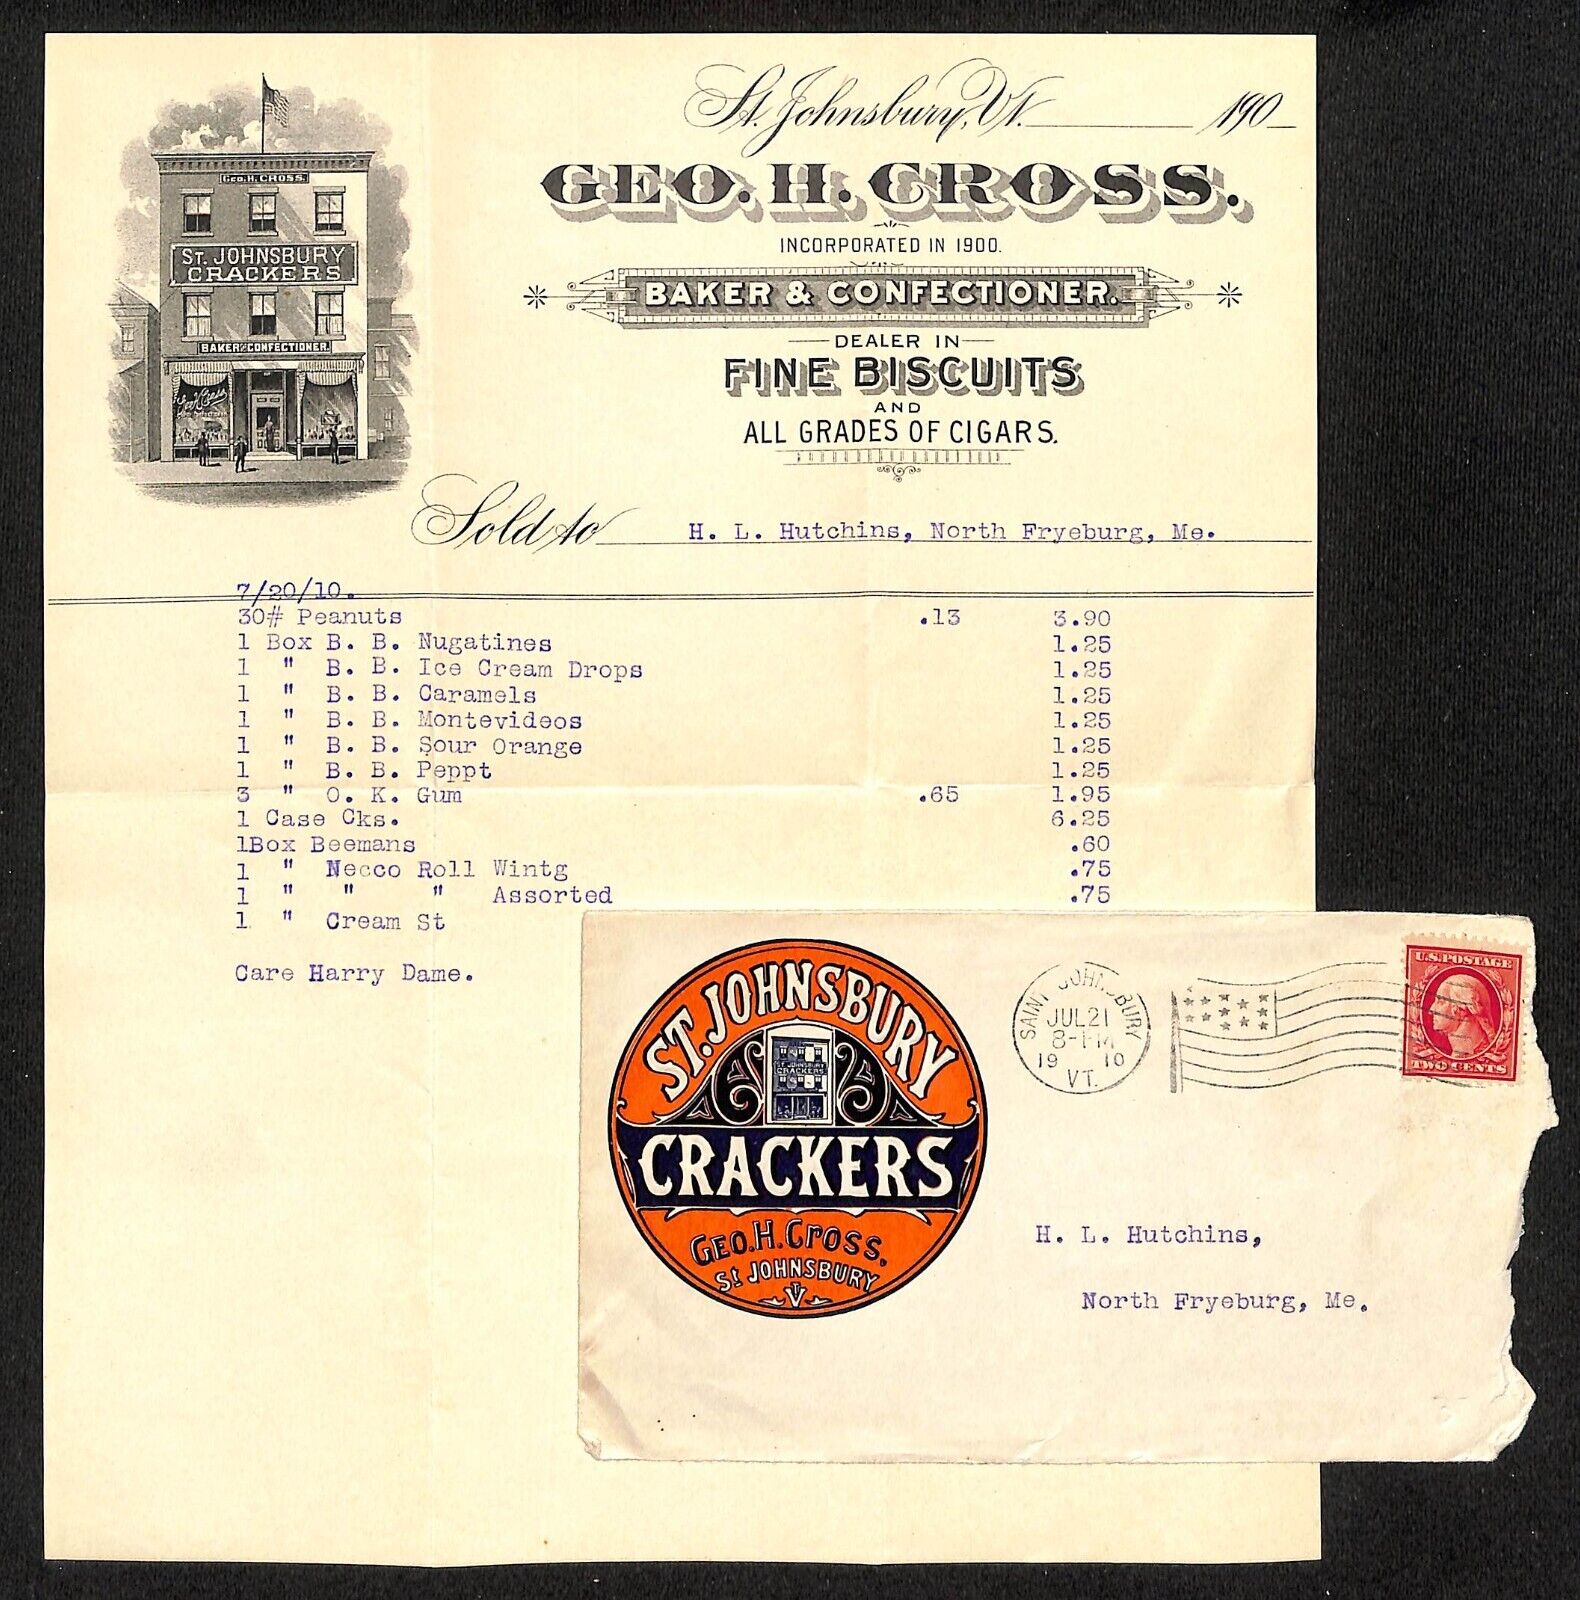 St. Johnsbury, VT Geo. H. Cross Baker & Confectioners 1910 Billhead & Cover